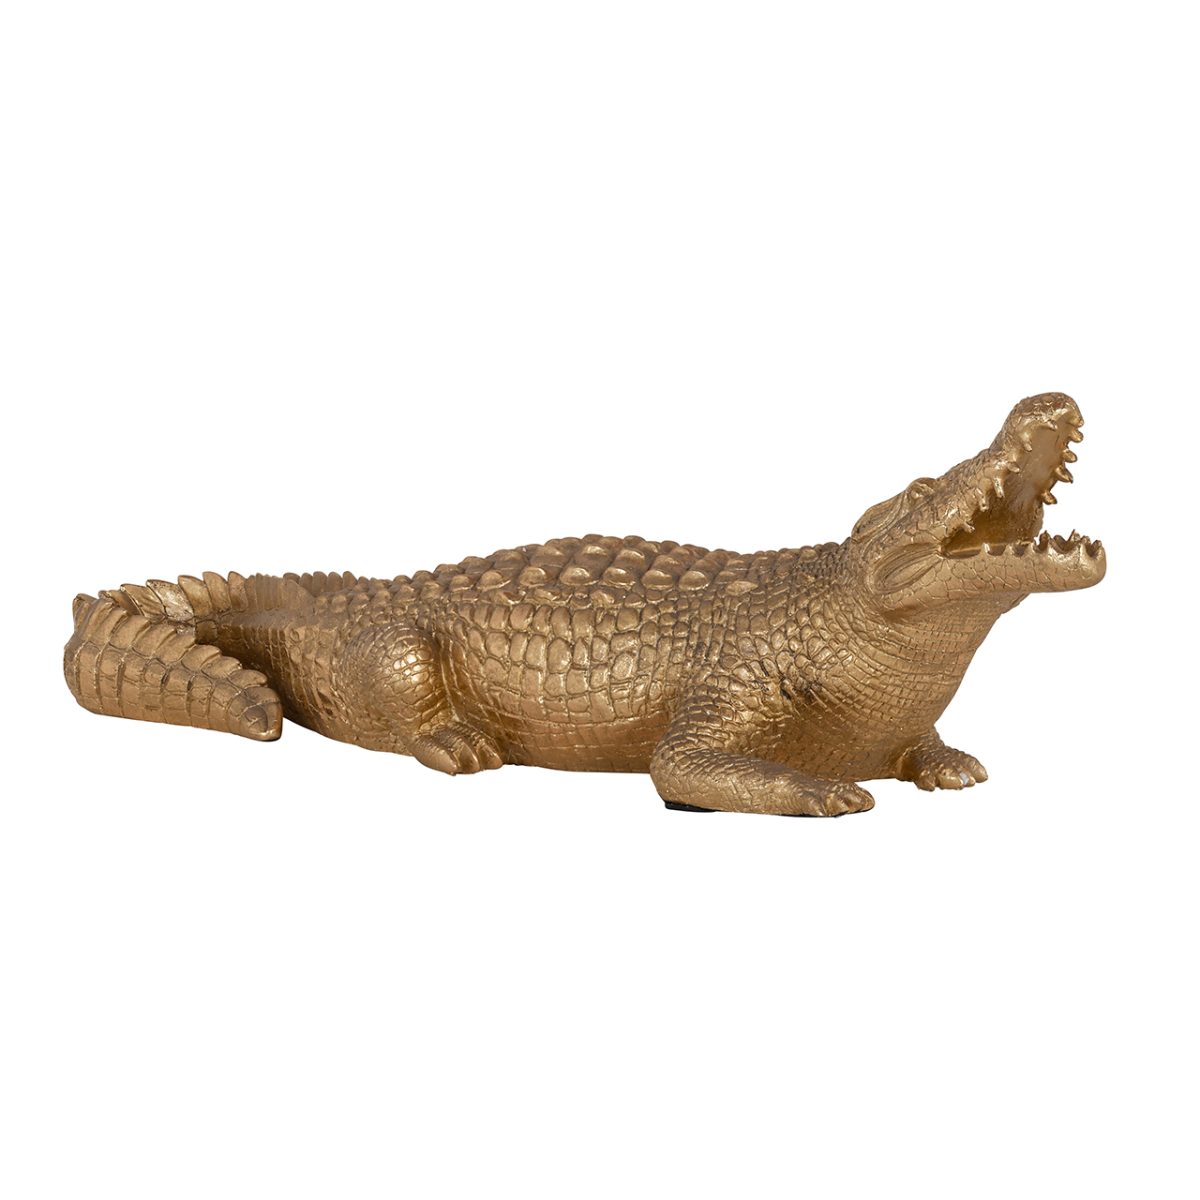 -AD-0002 - Krokodil deco object klein (Gold)